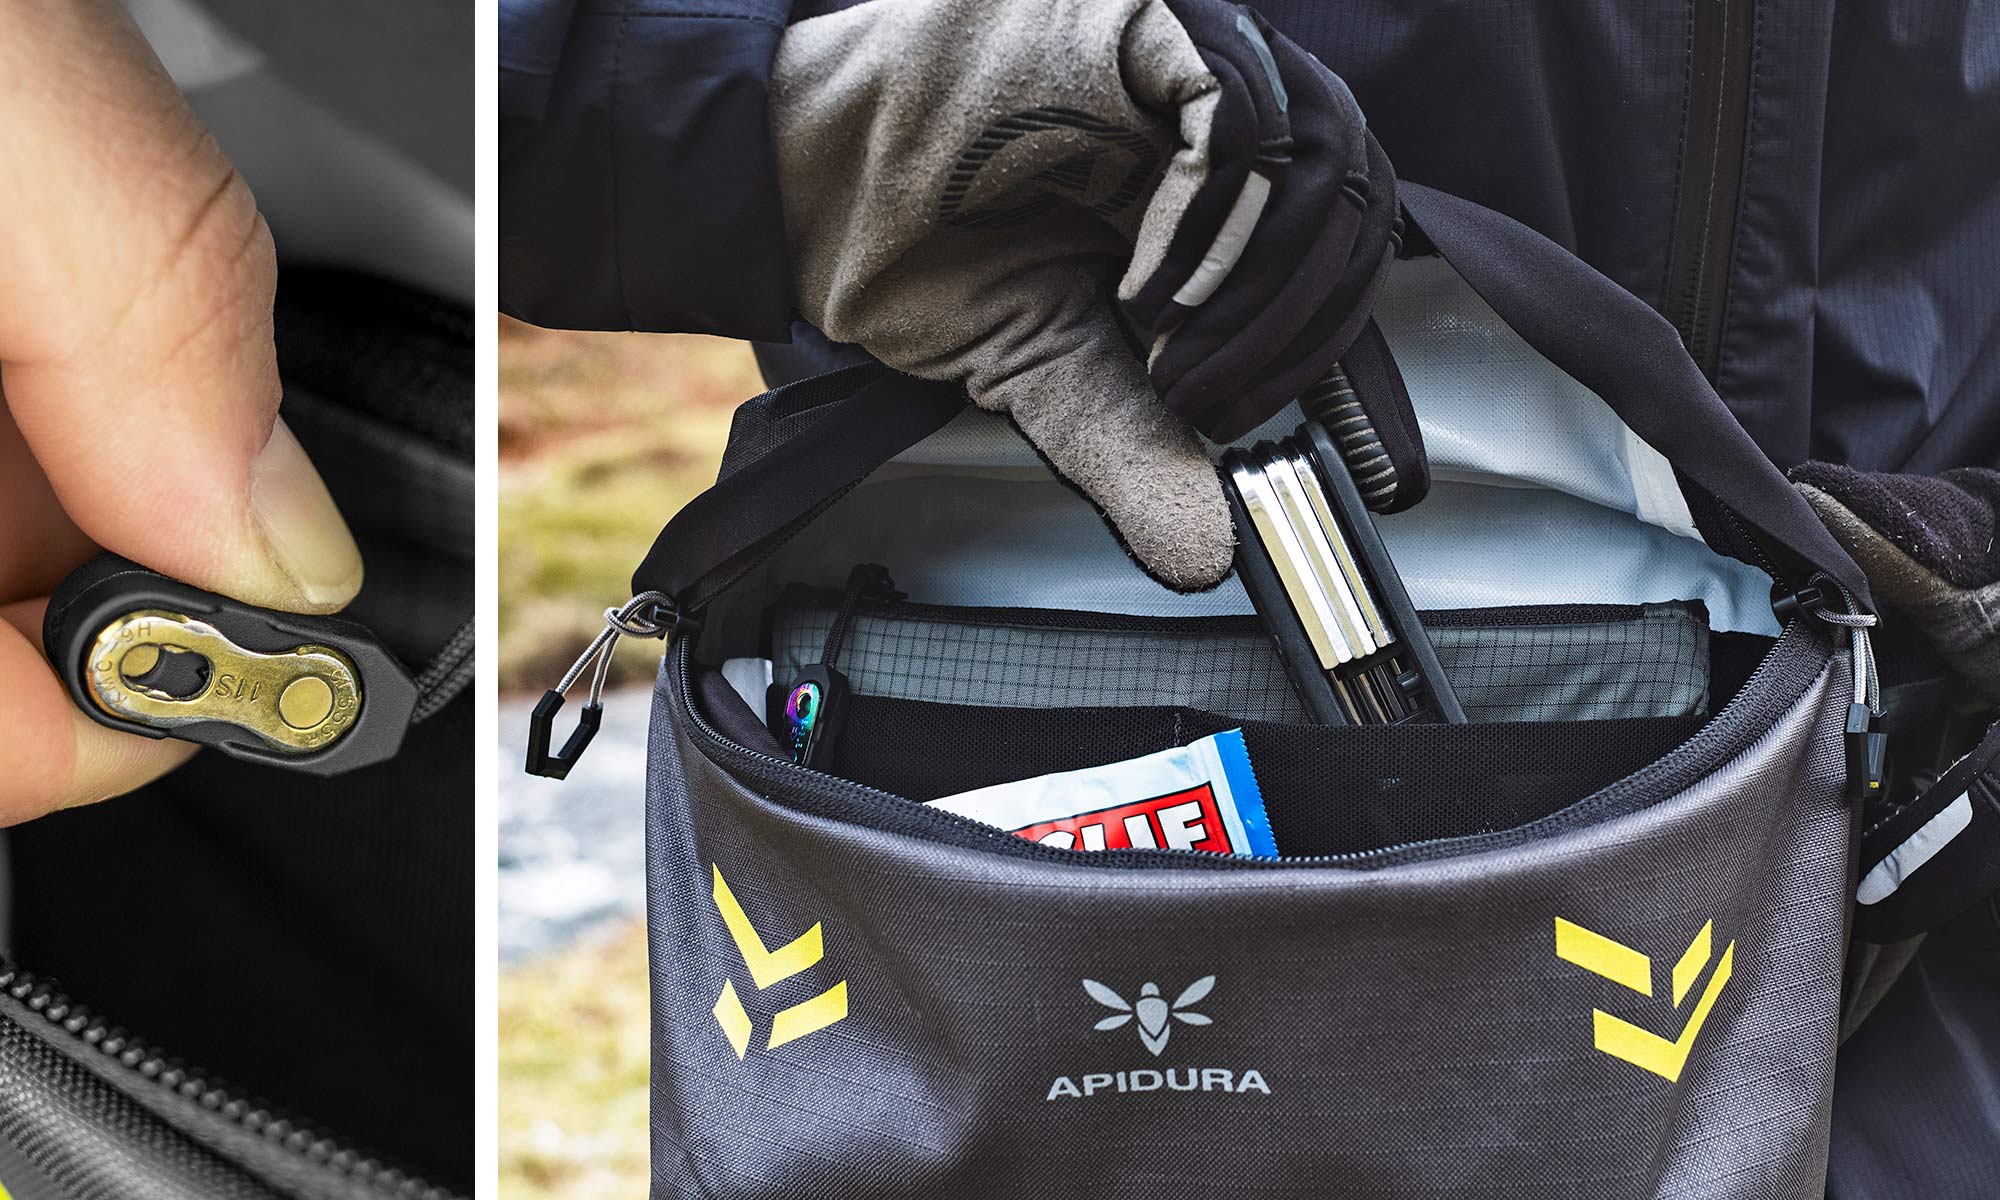 Apidura Backcountry Hip Pack bikepacking-style waist bag, inside details